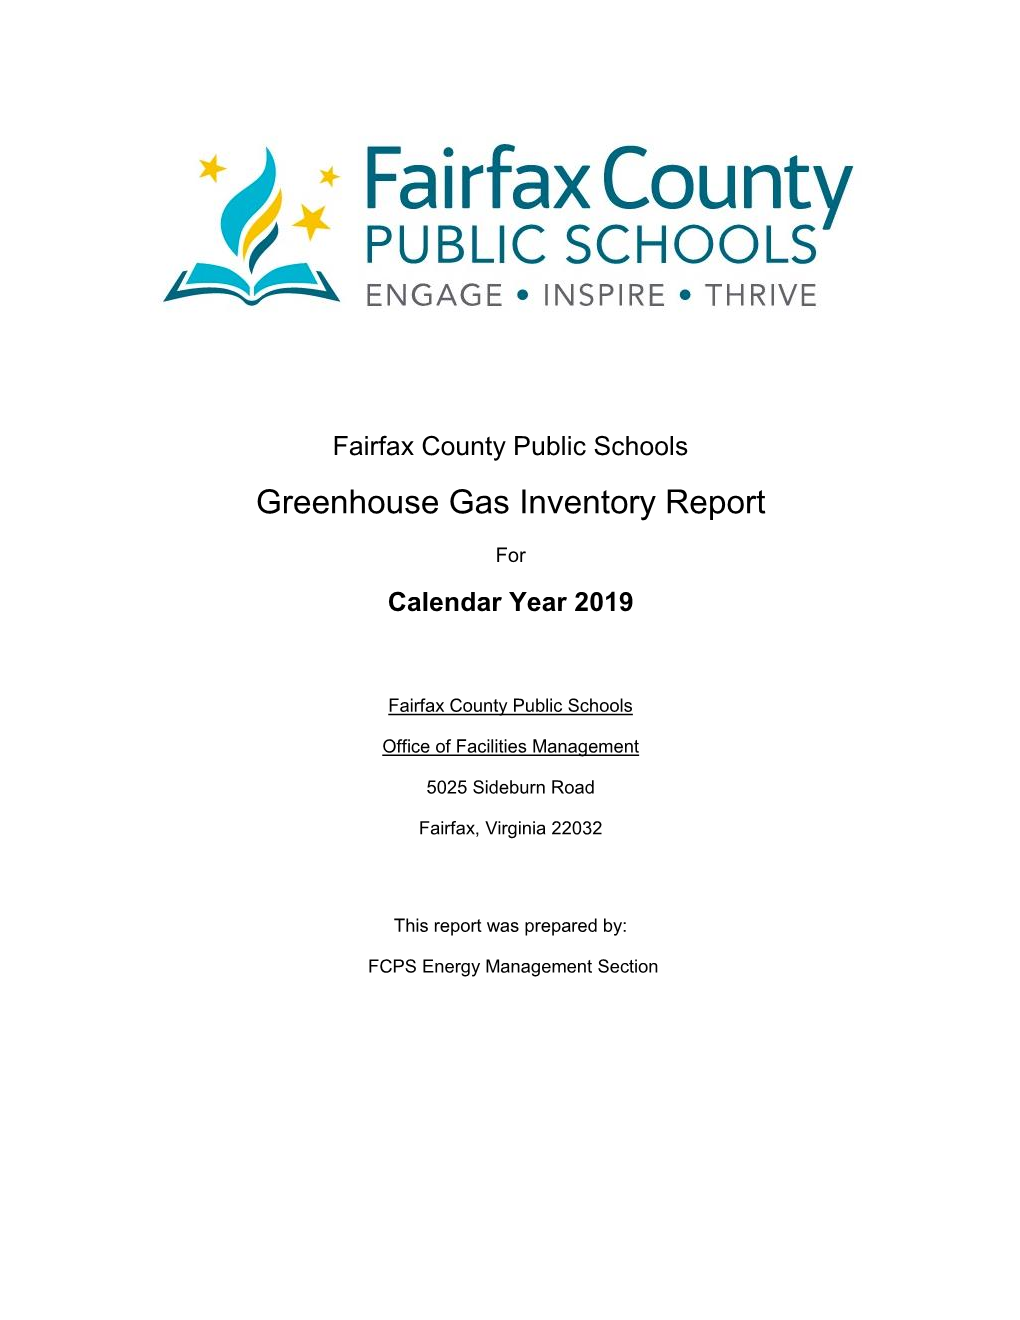 Fairfax County Public Schools Greenhouse Gas Inventory Report